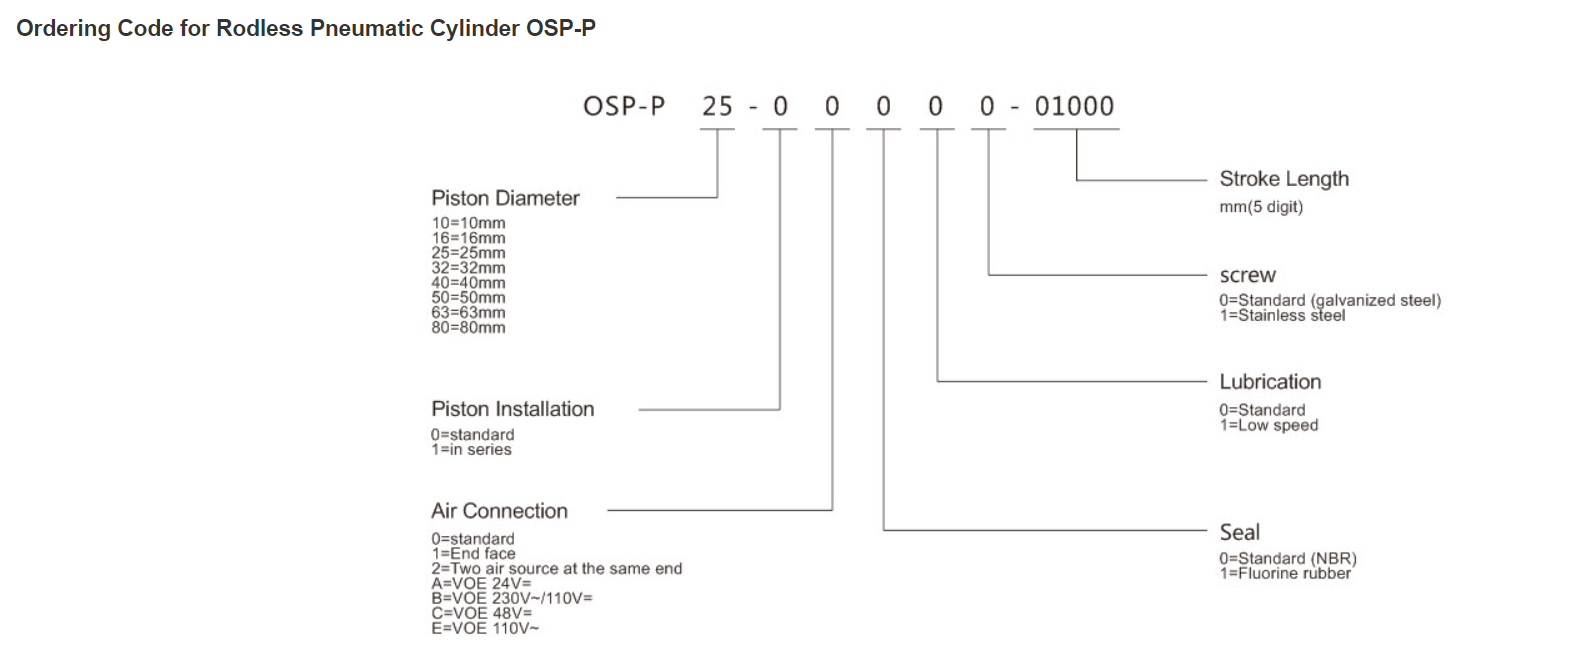 Rodless Pneumatic Cylinder OSP-P